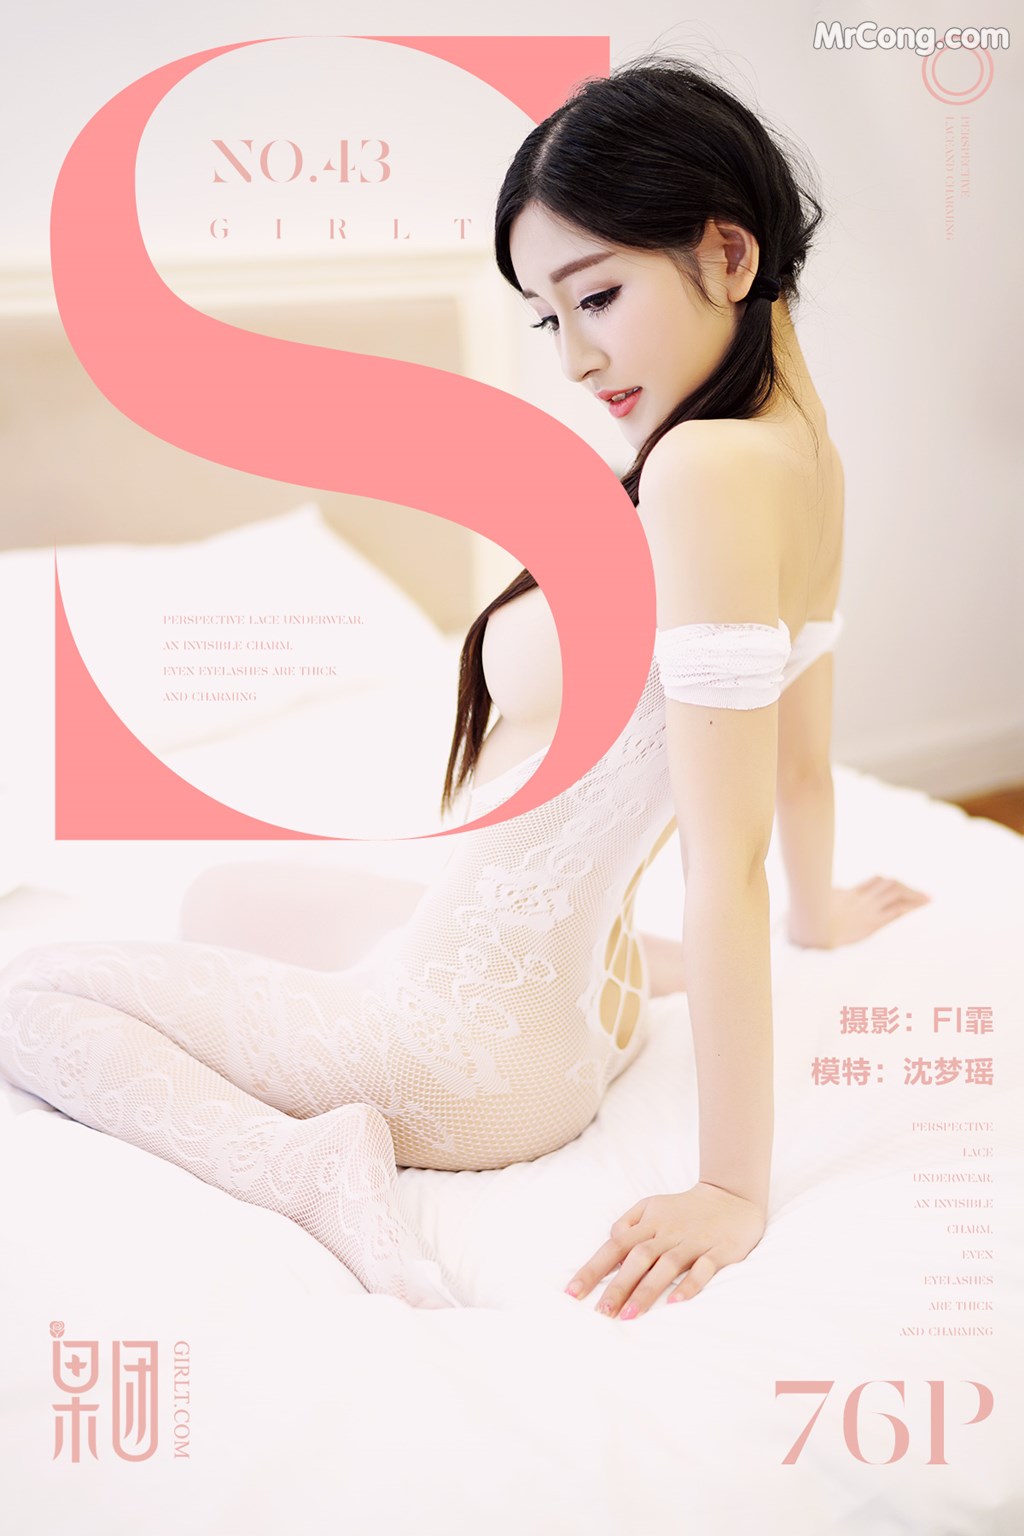 GIRLT Vol.043: Model Shen Mengyao (沈 梦瑶) (42 photos) photo 1-0